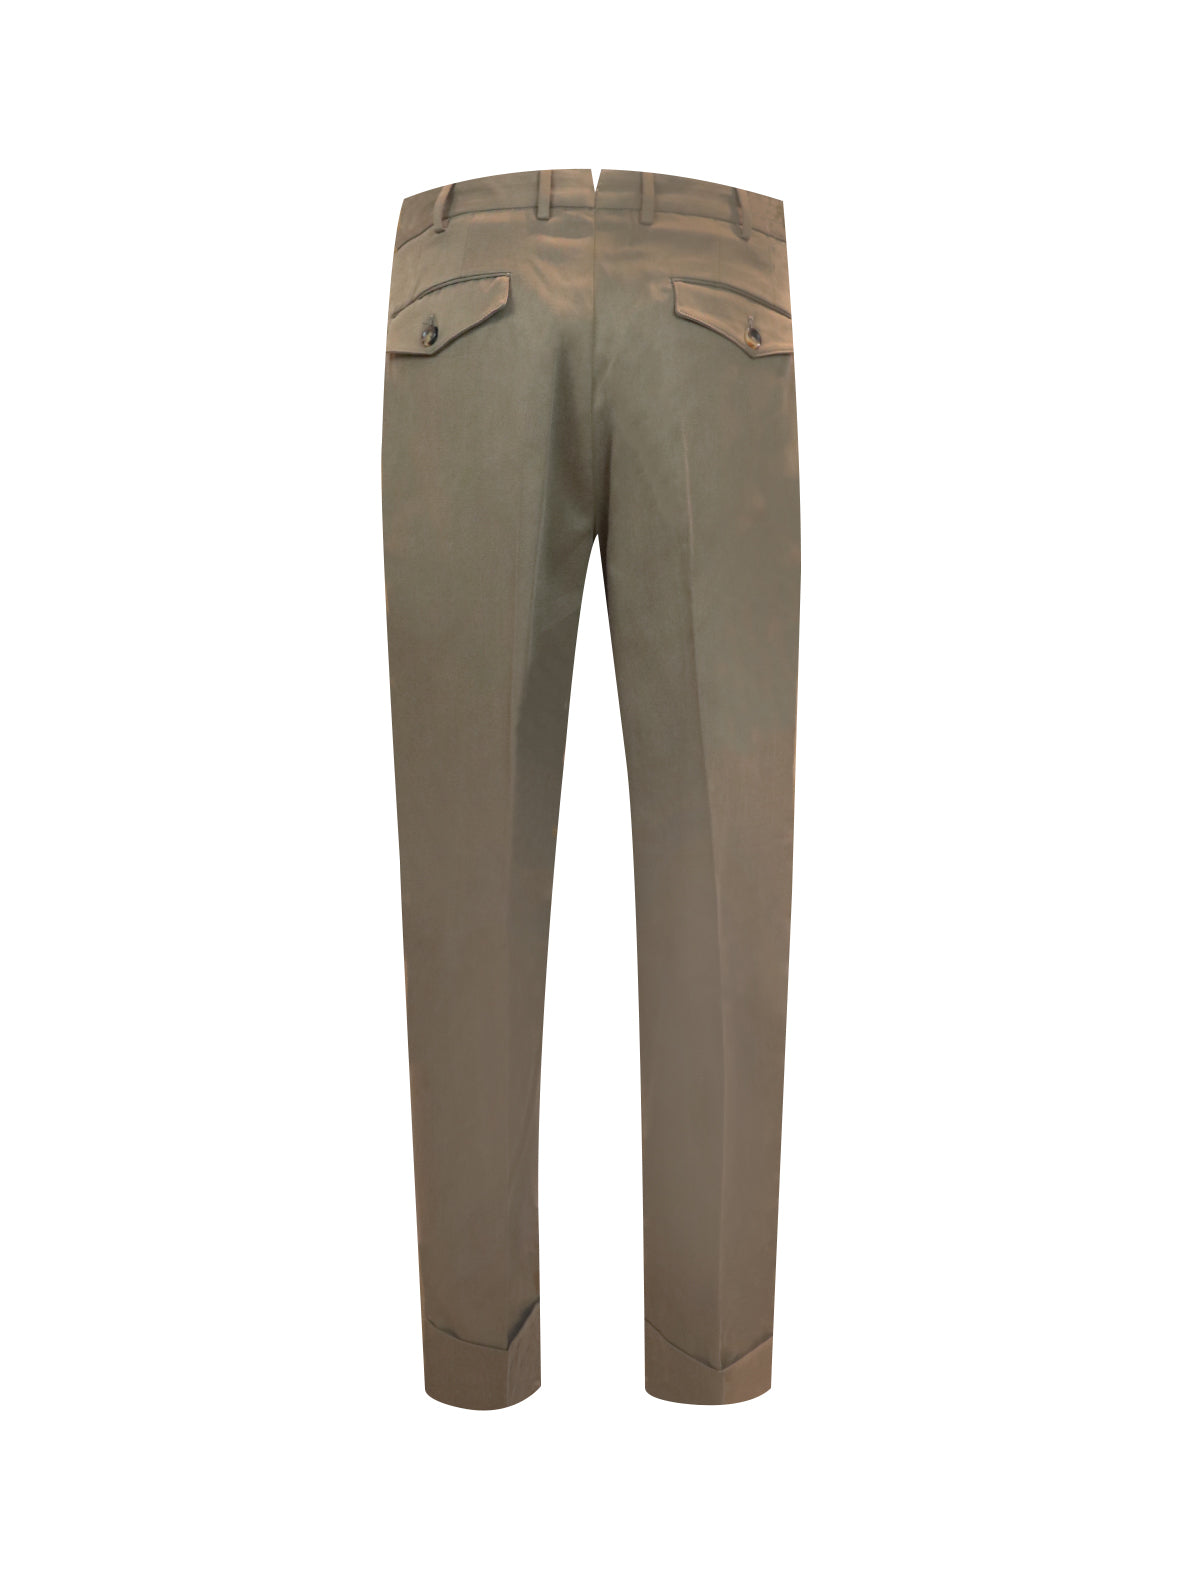 PT TORINO ReWorked Trouser in Grey/Brown